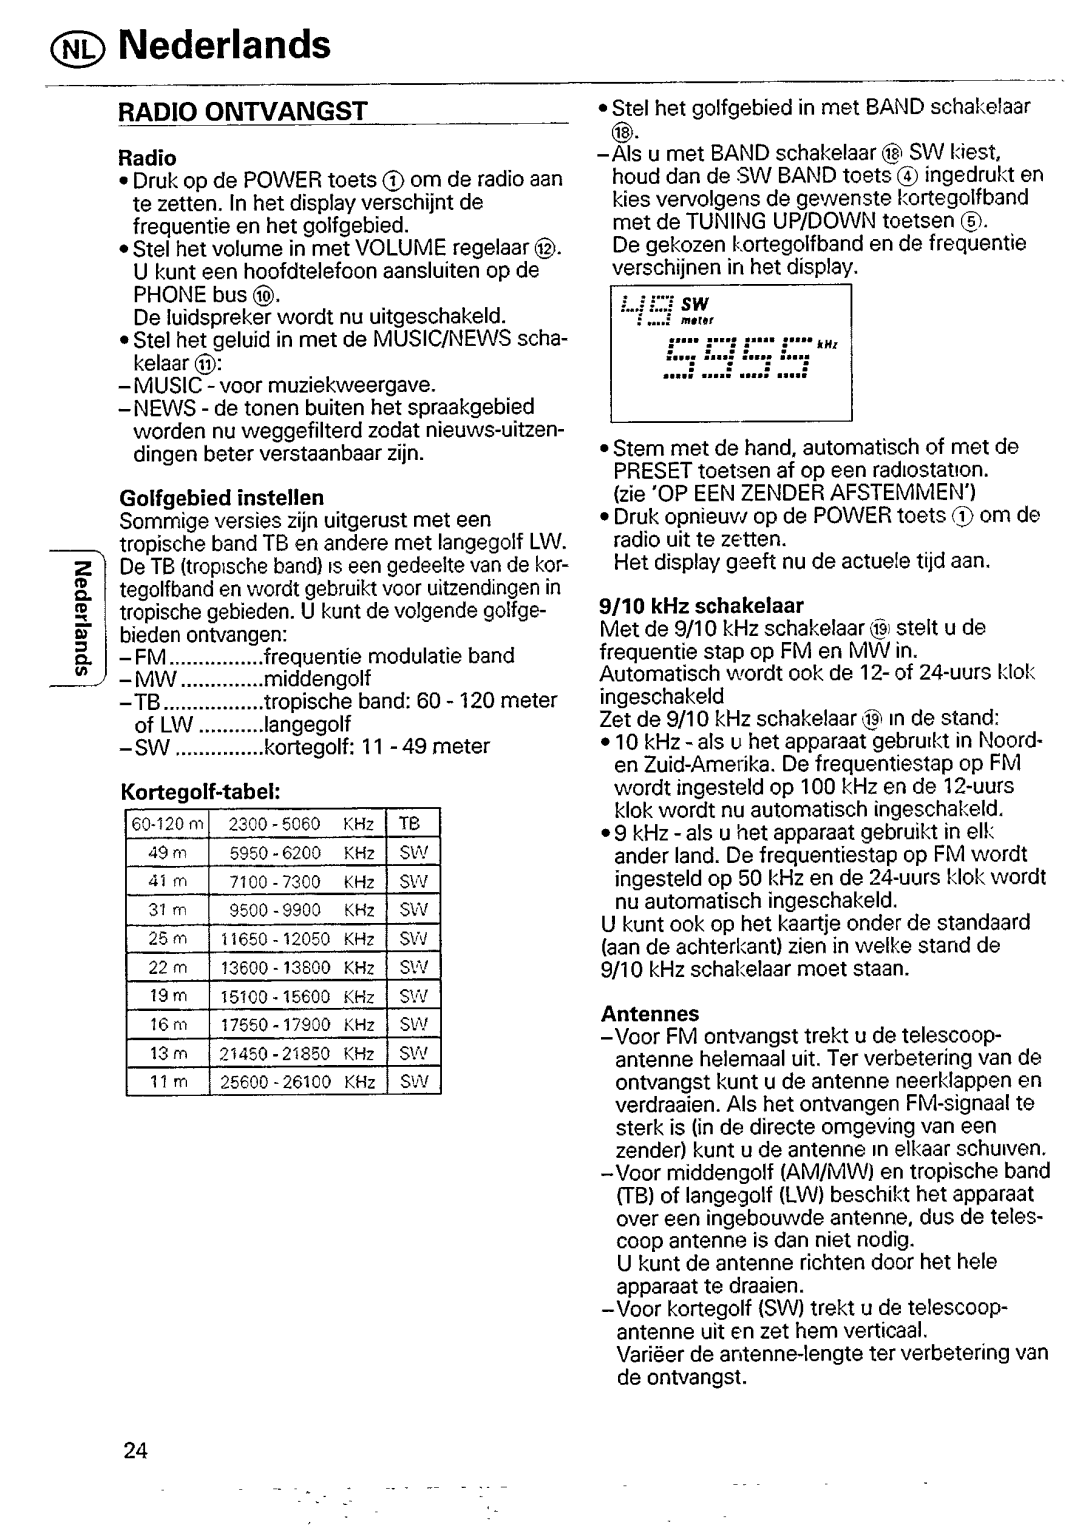 Philips AE 3625 manual 